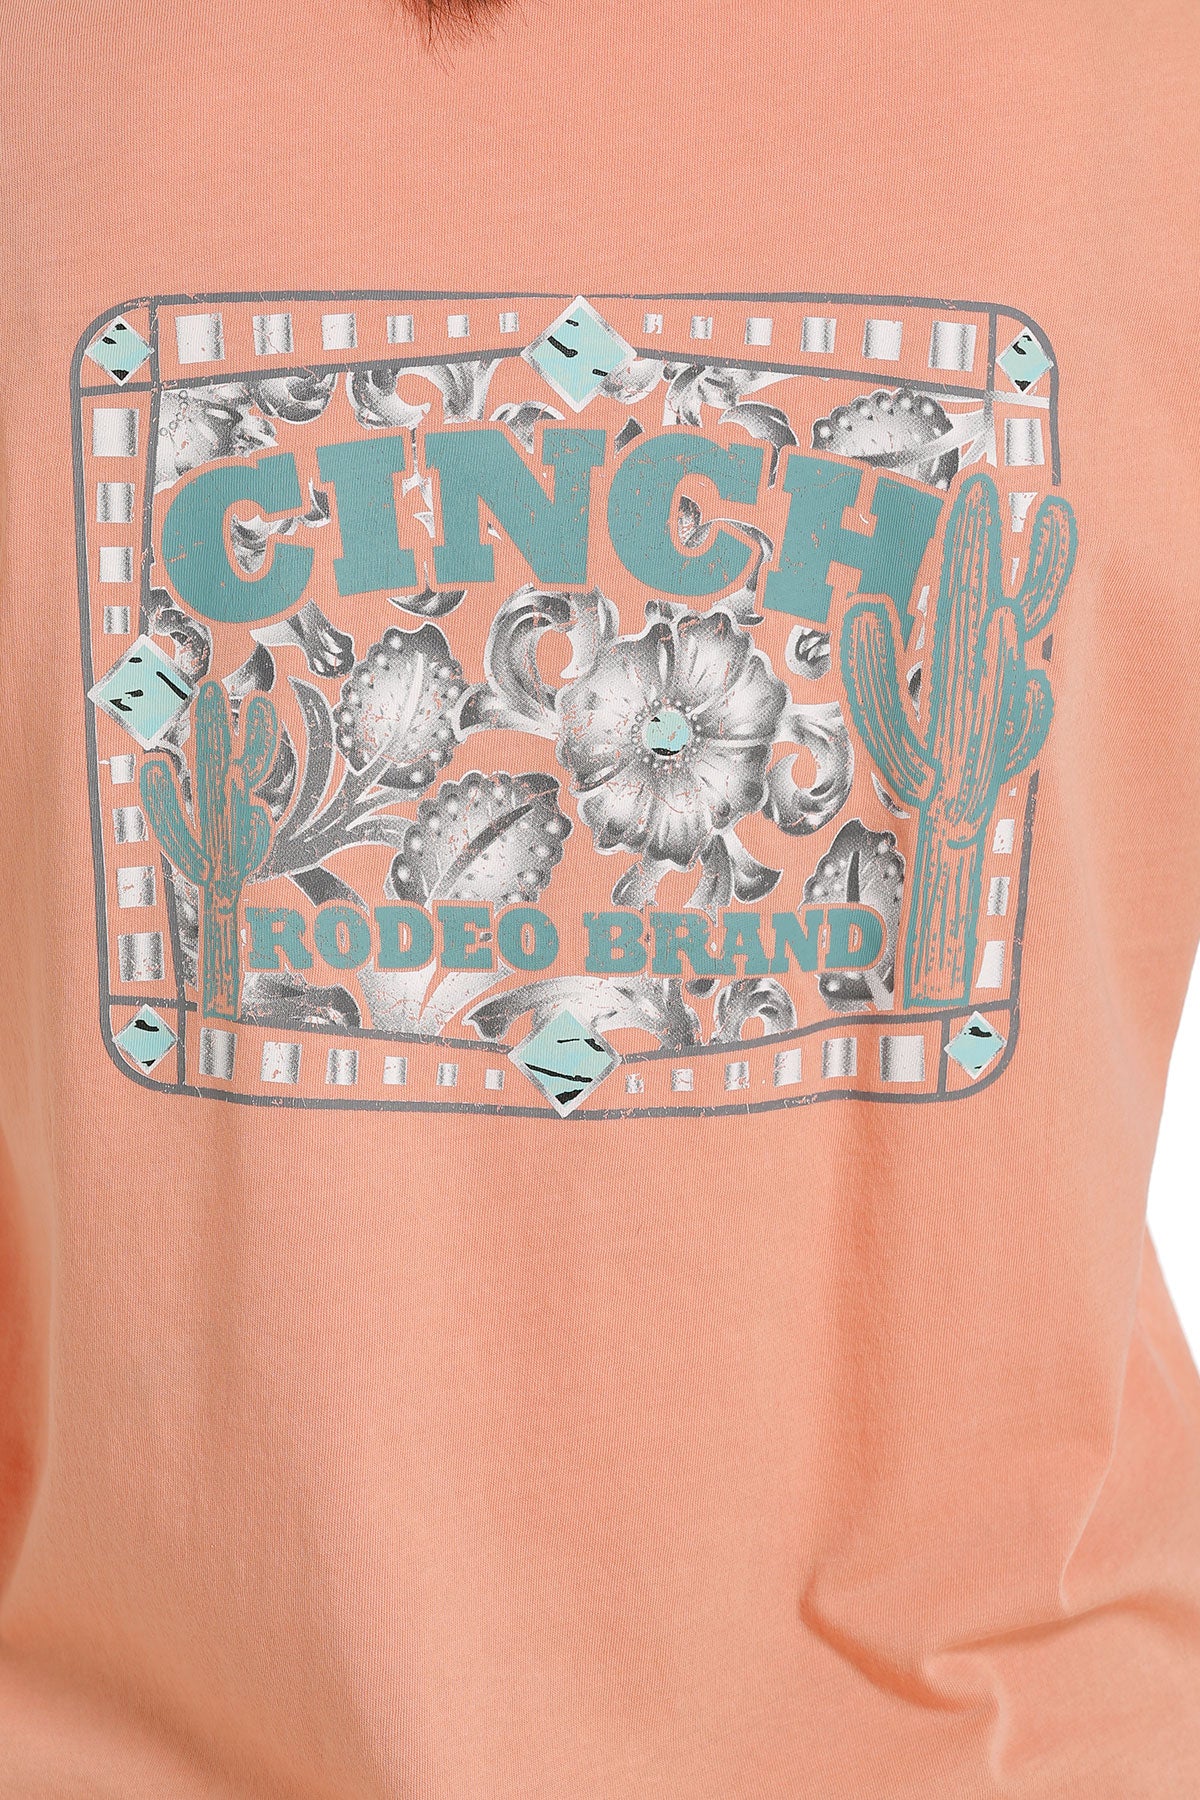 Cinch Women's Orange and Teal T-Shirt